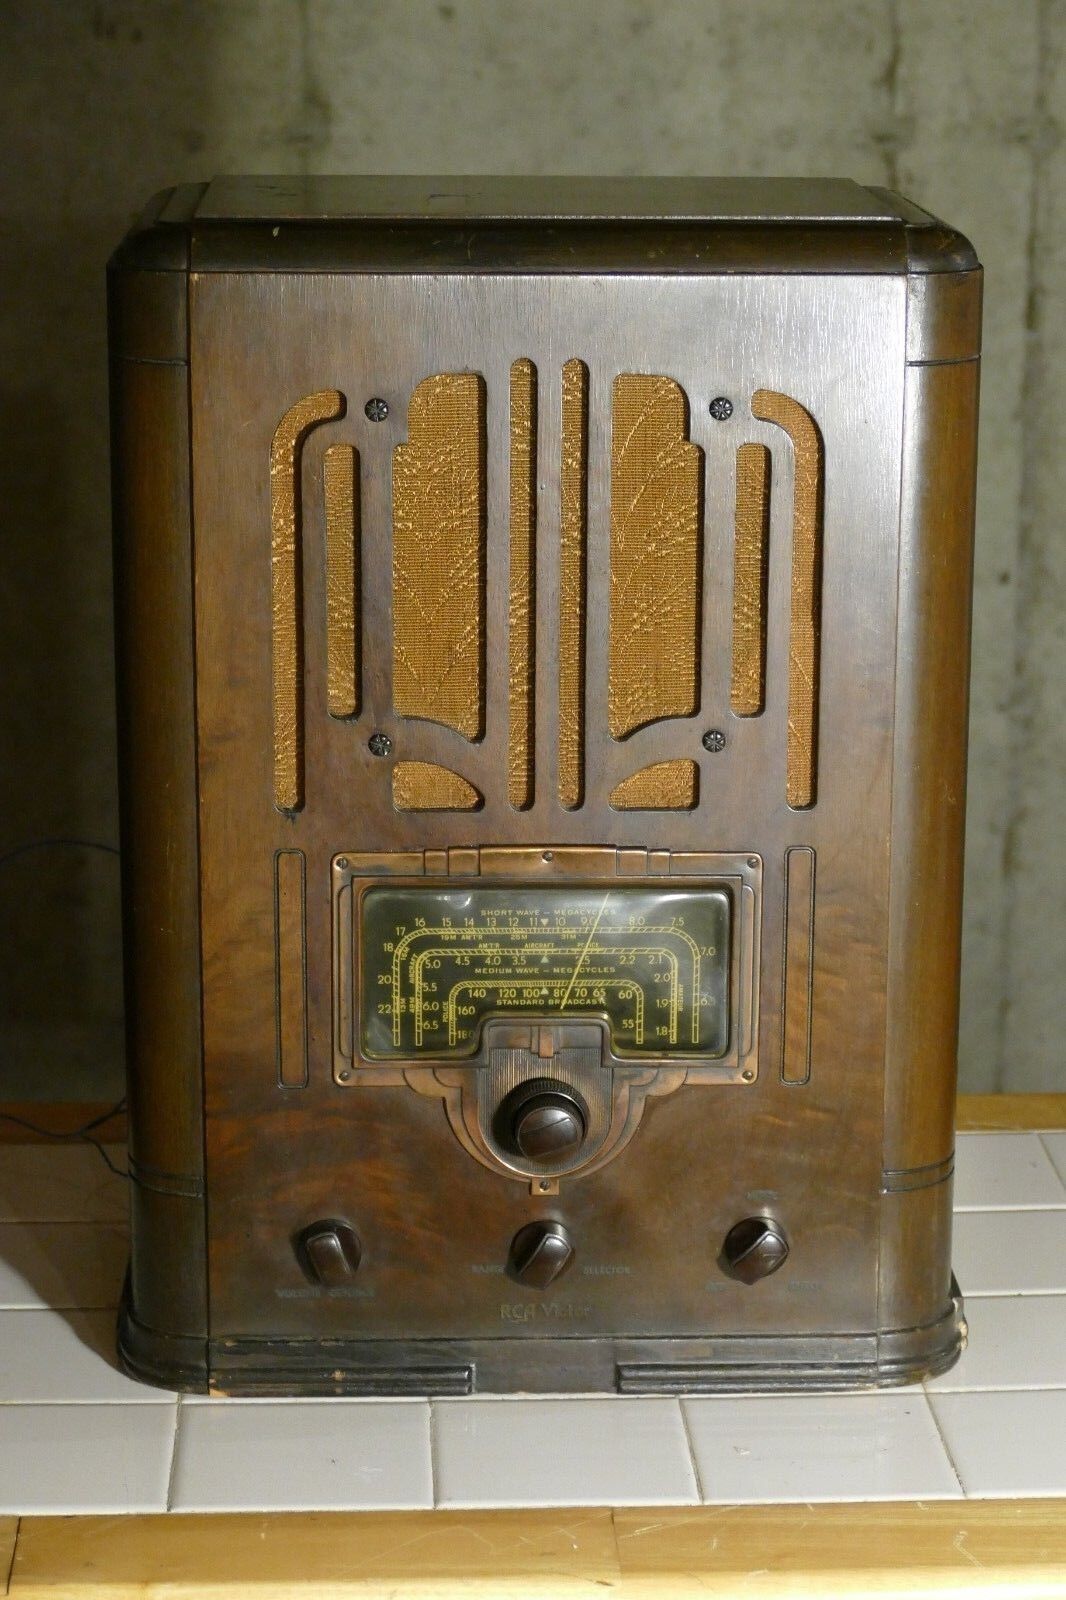 Big beautiful art deco 1936 RCA model 7T tombstone radio, restored, works great